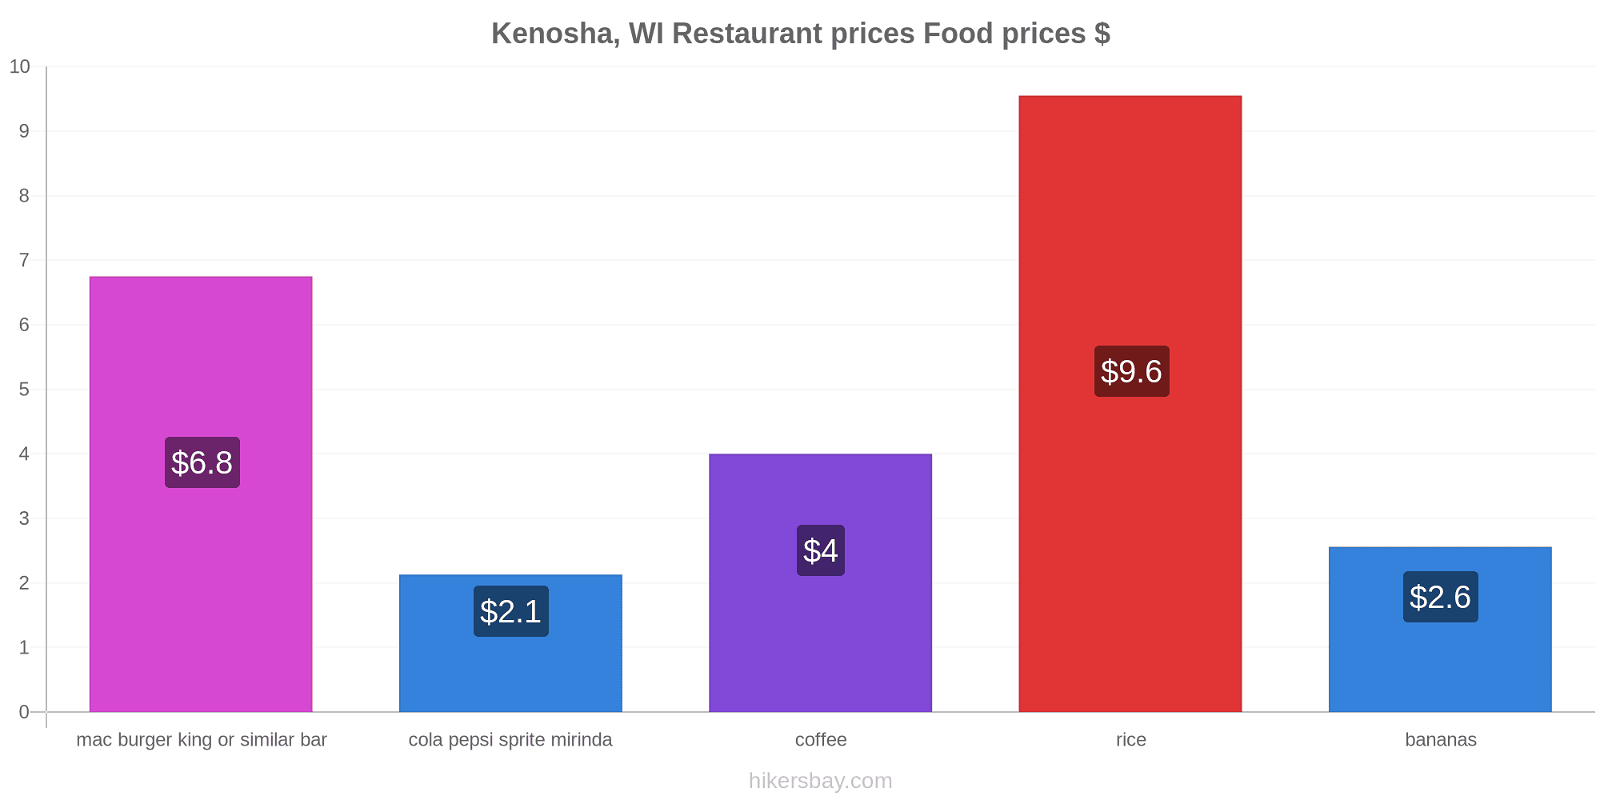 Kenosha, WI price changes hikersbay.com